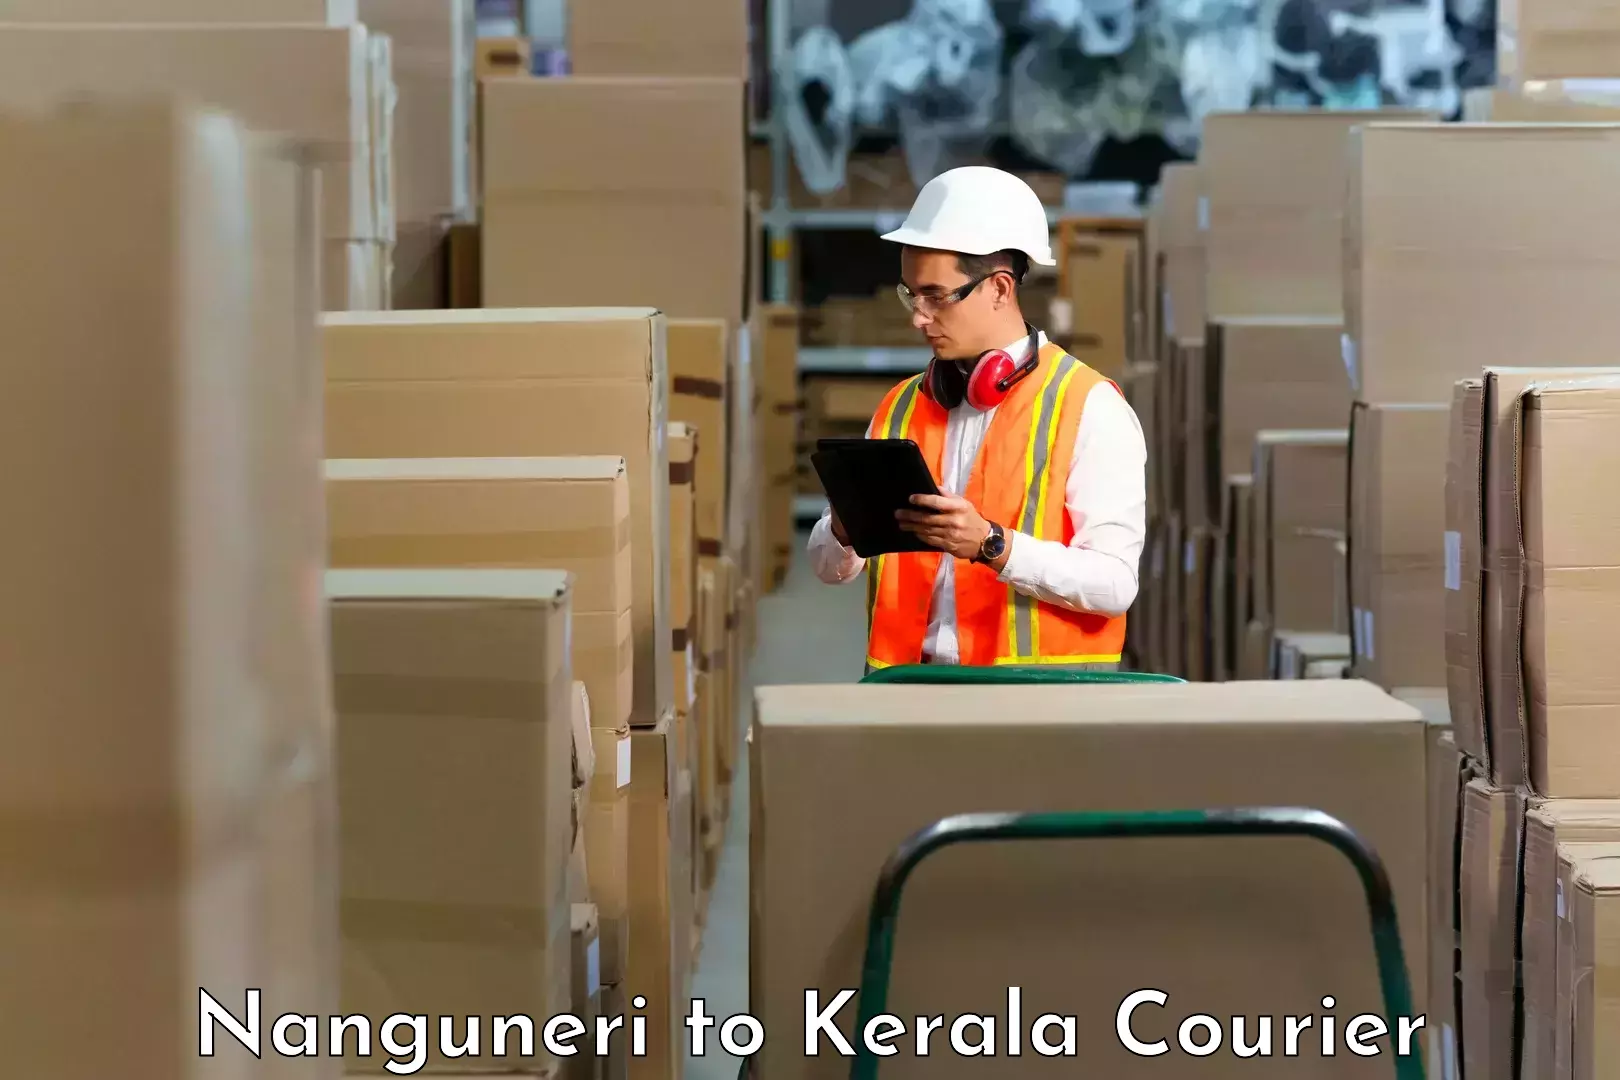 Efficient parcel service Nanguneri to Koothattukulam